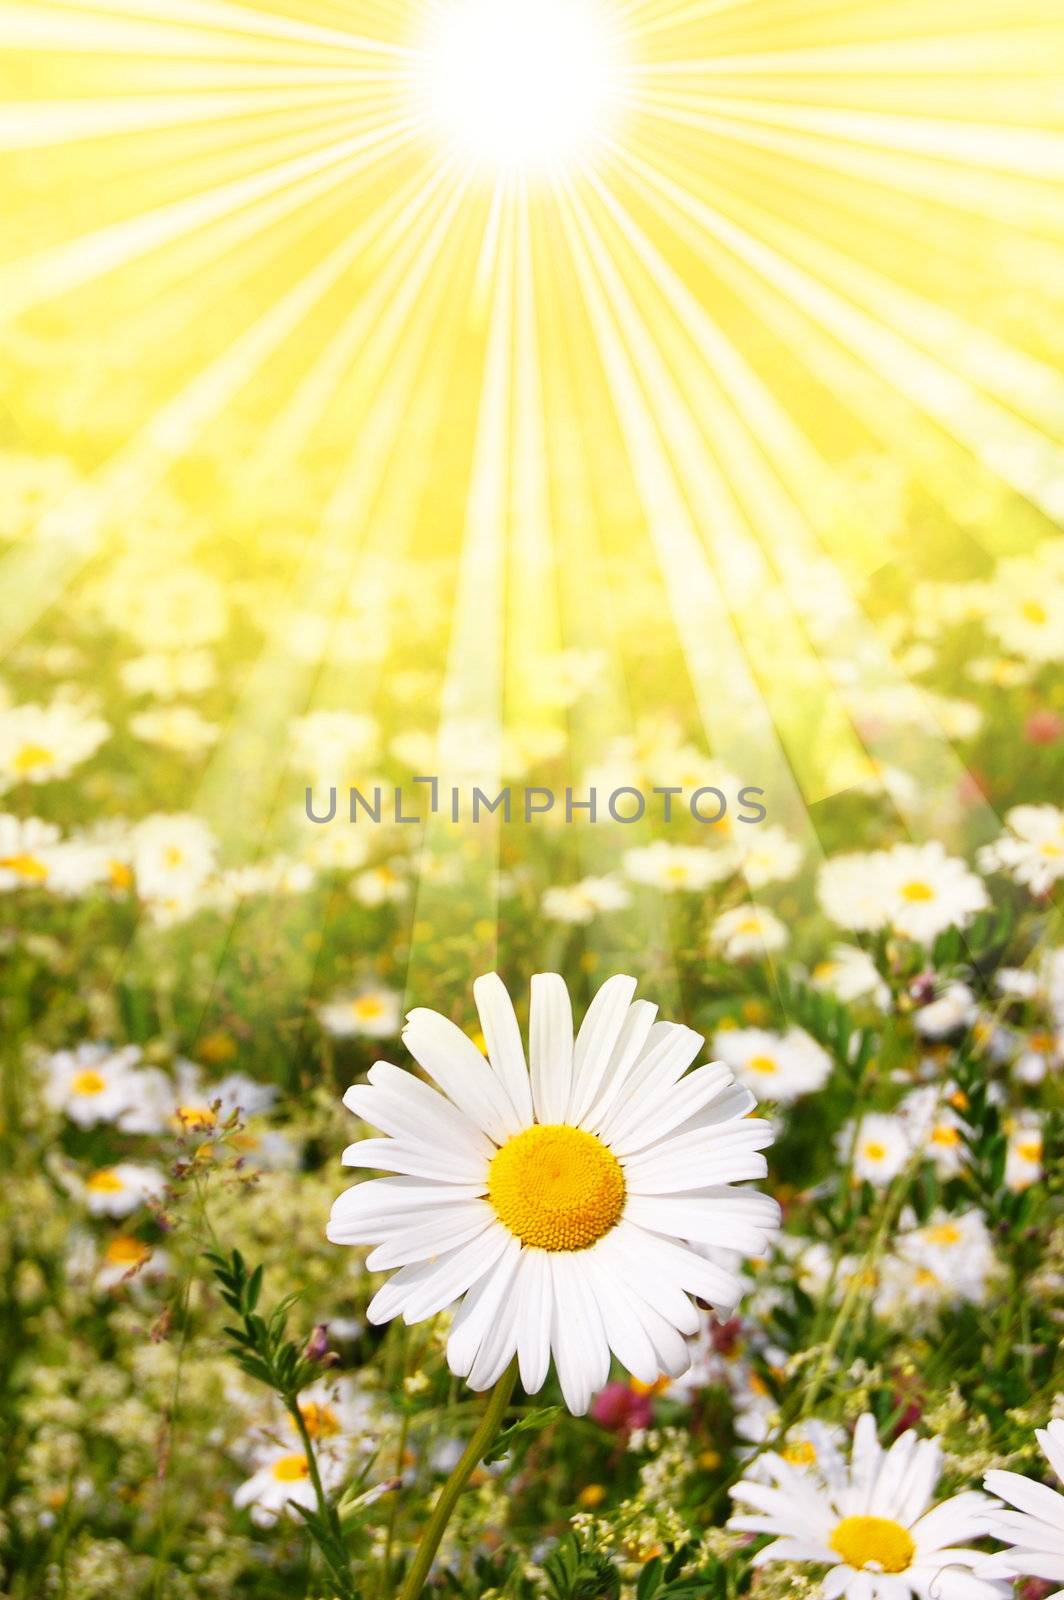 flower and sun by gunnar3000